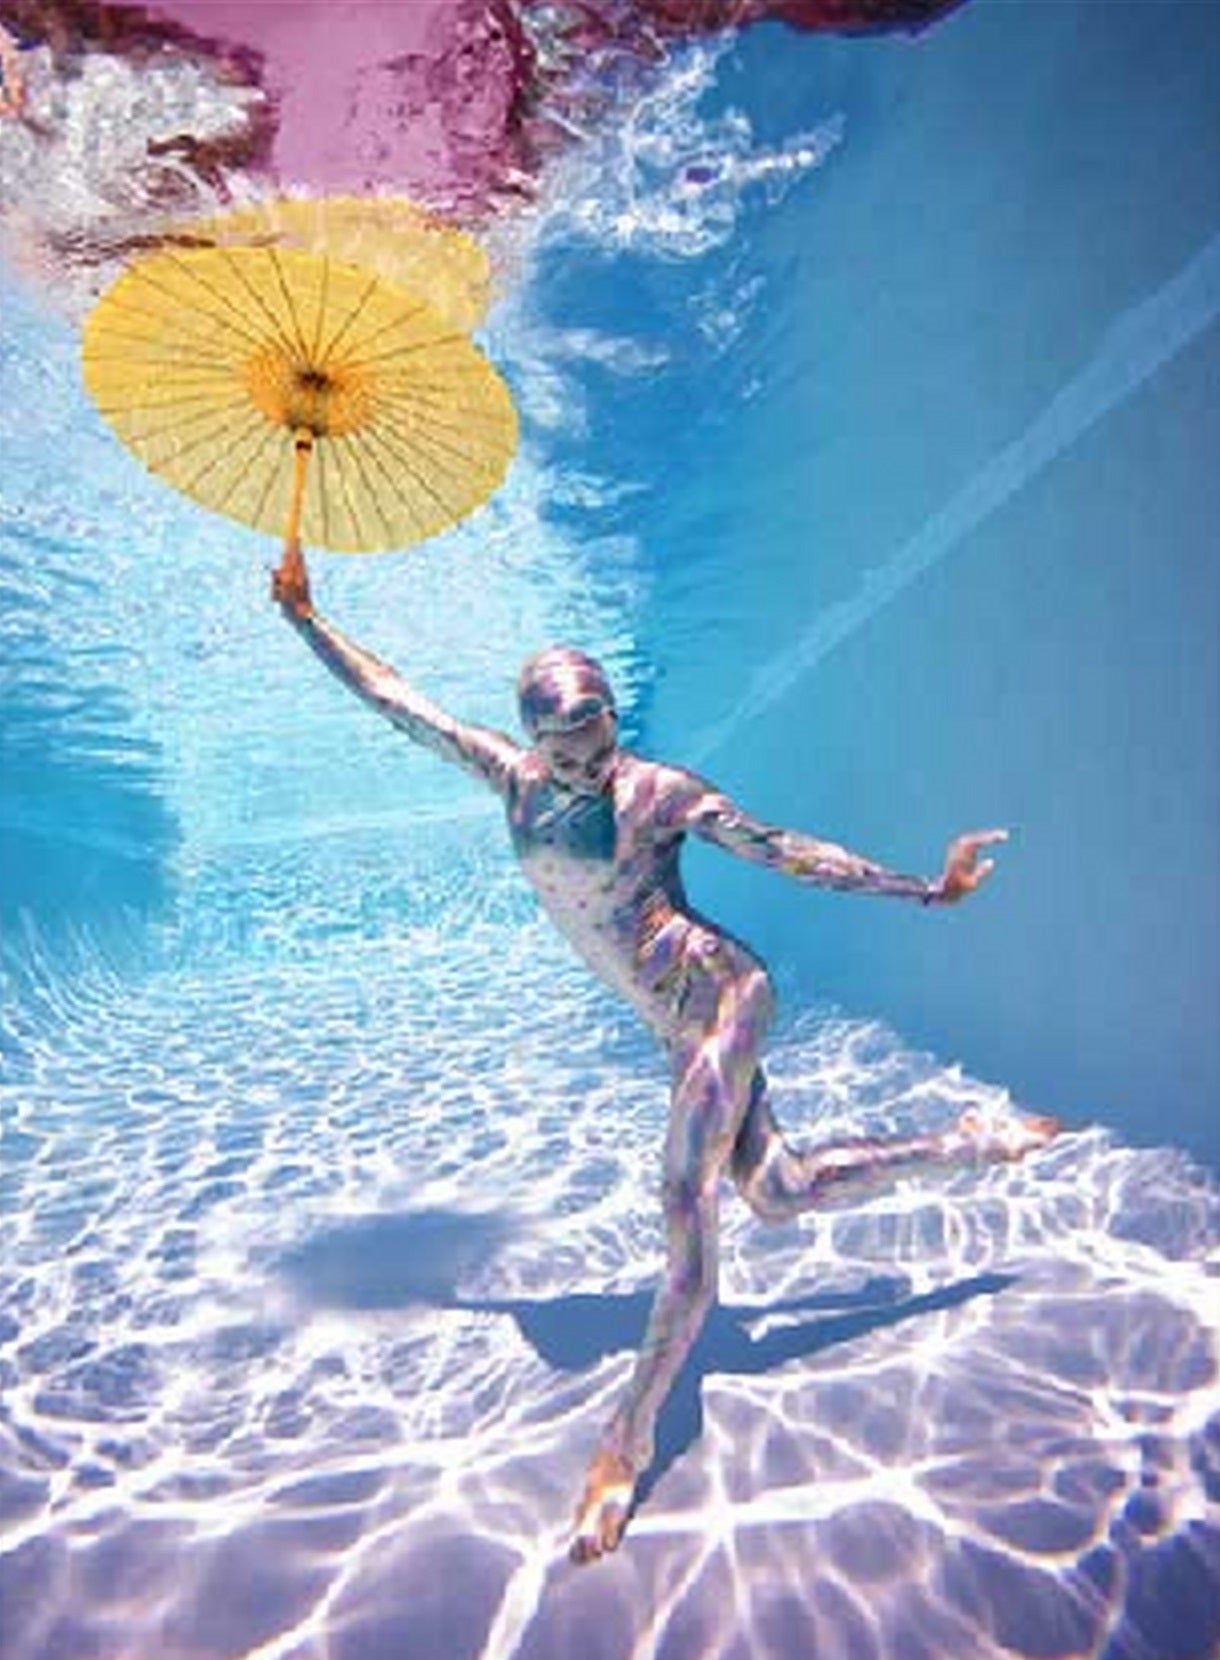 Underwater Study # 2778 - model posing underwater in bodysuit with umbrella